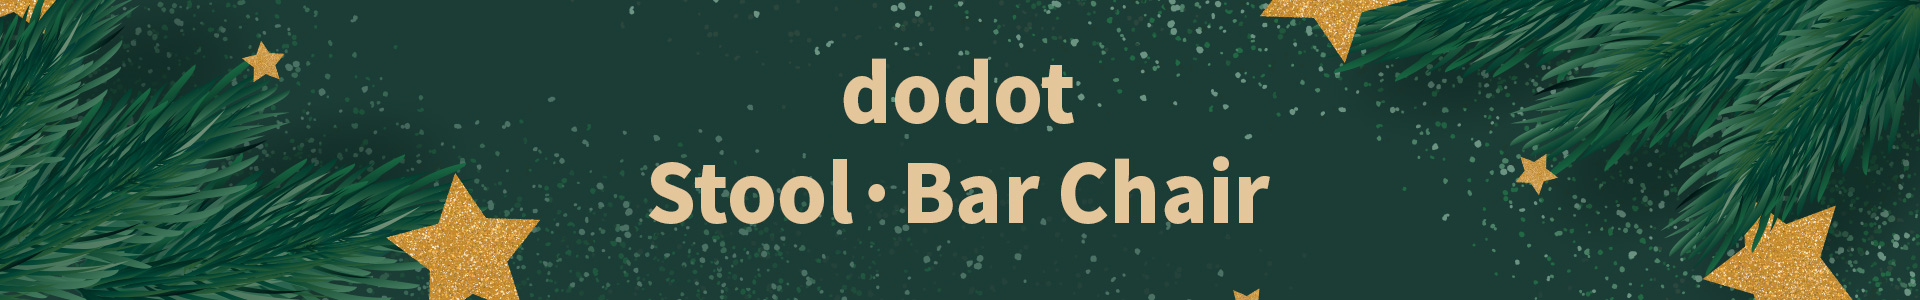 dodot Stool · Bar Chair